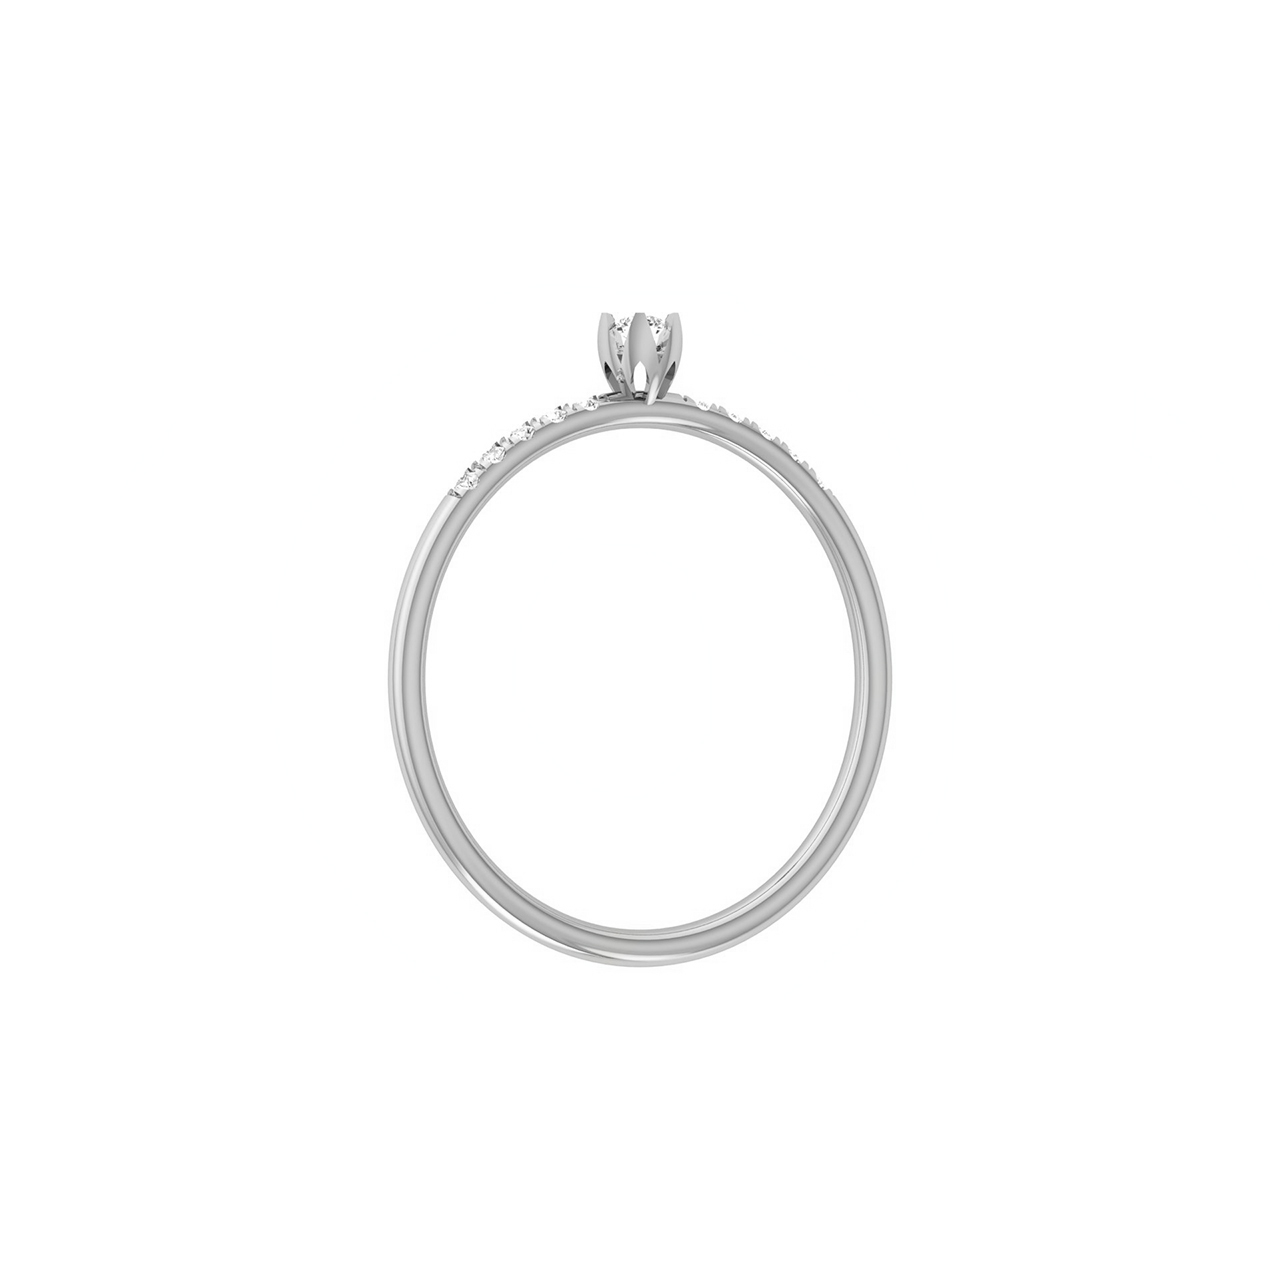 The Charm Design Diamond Ring